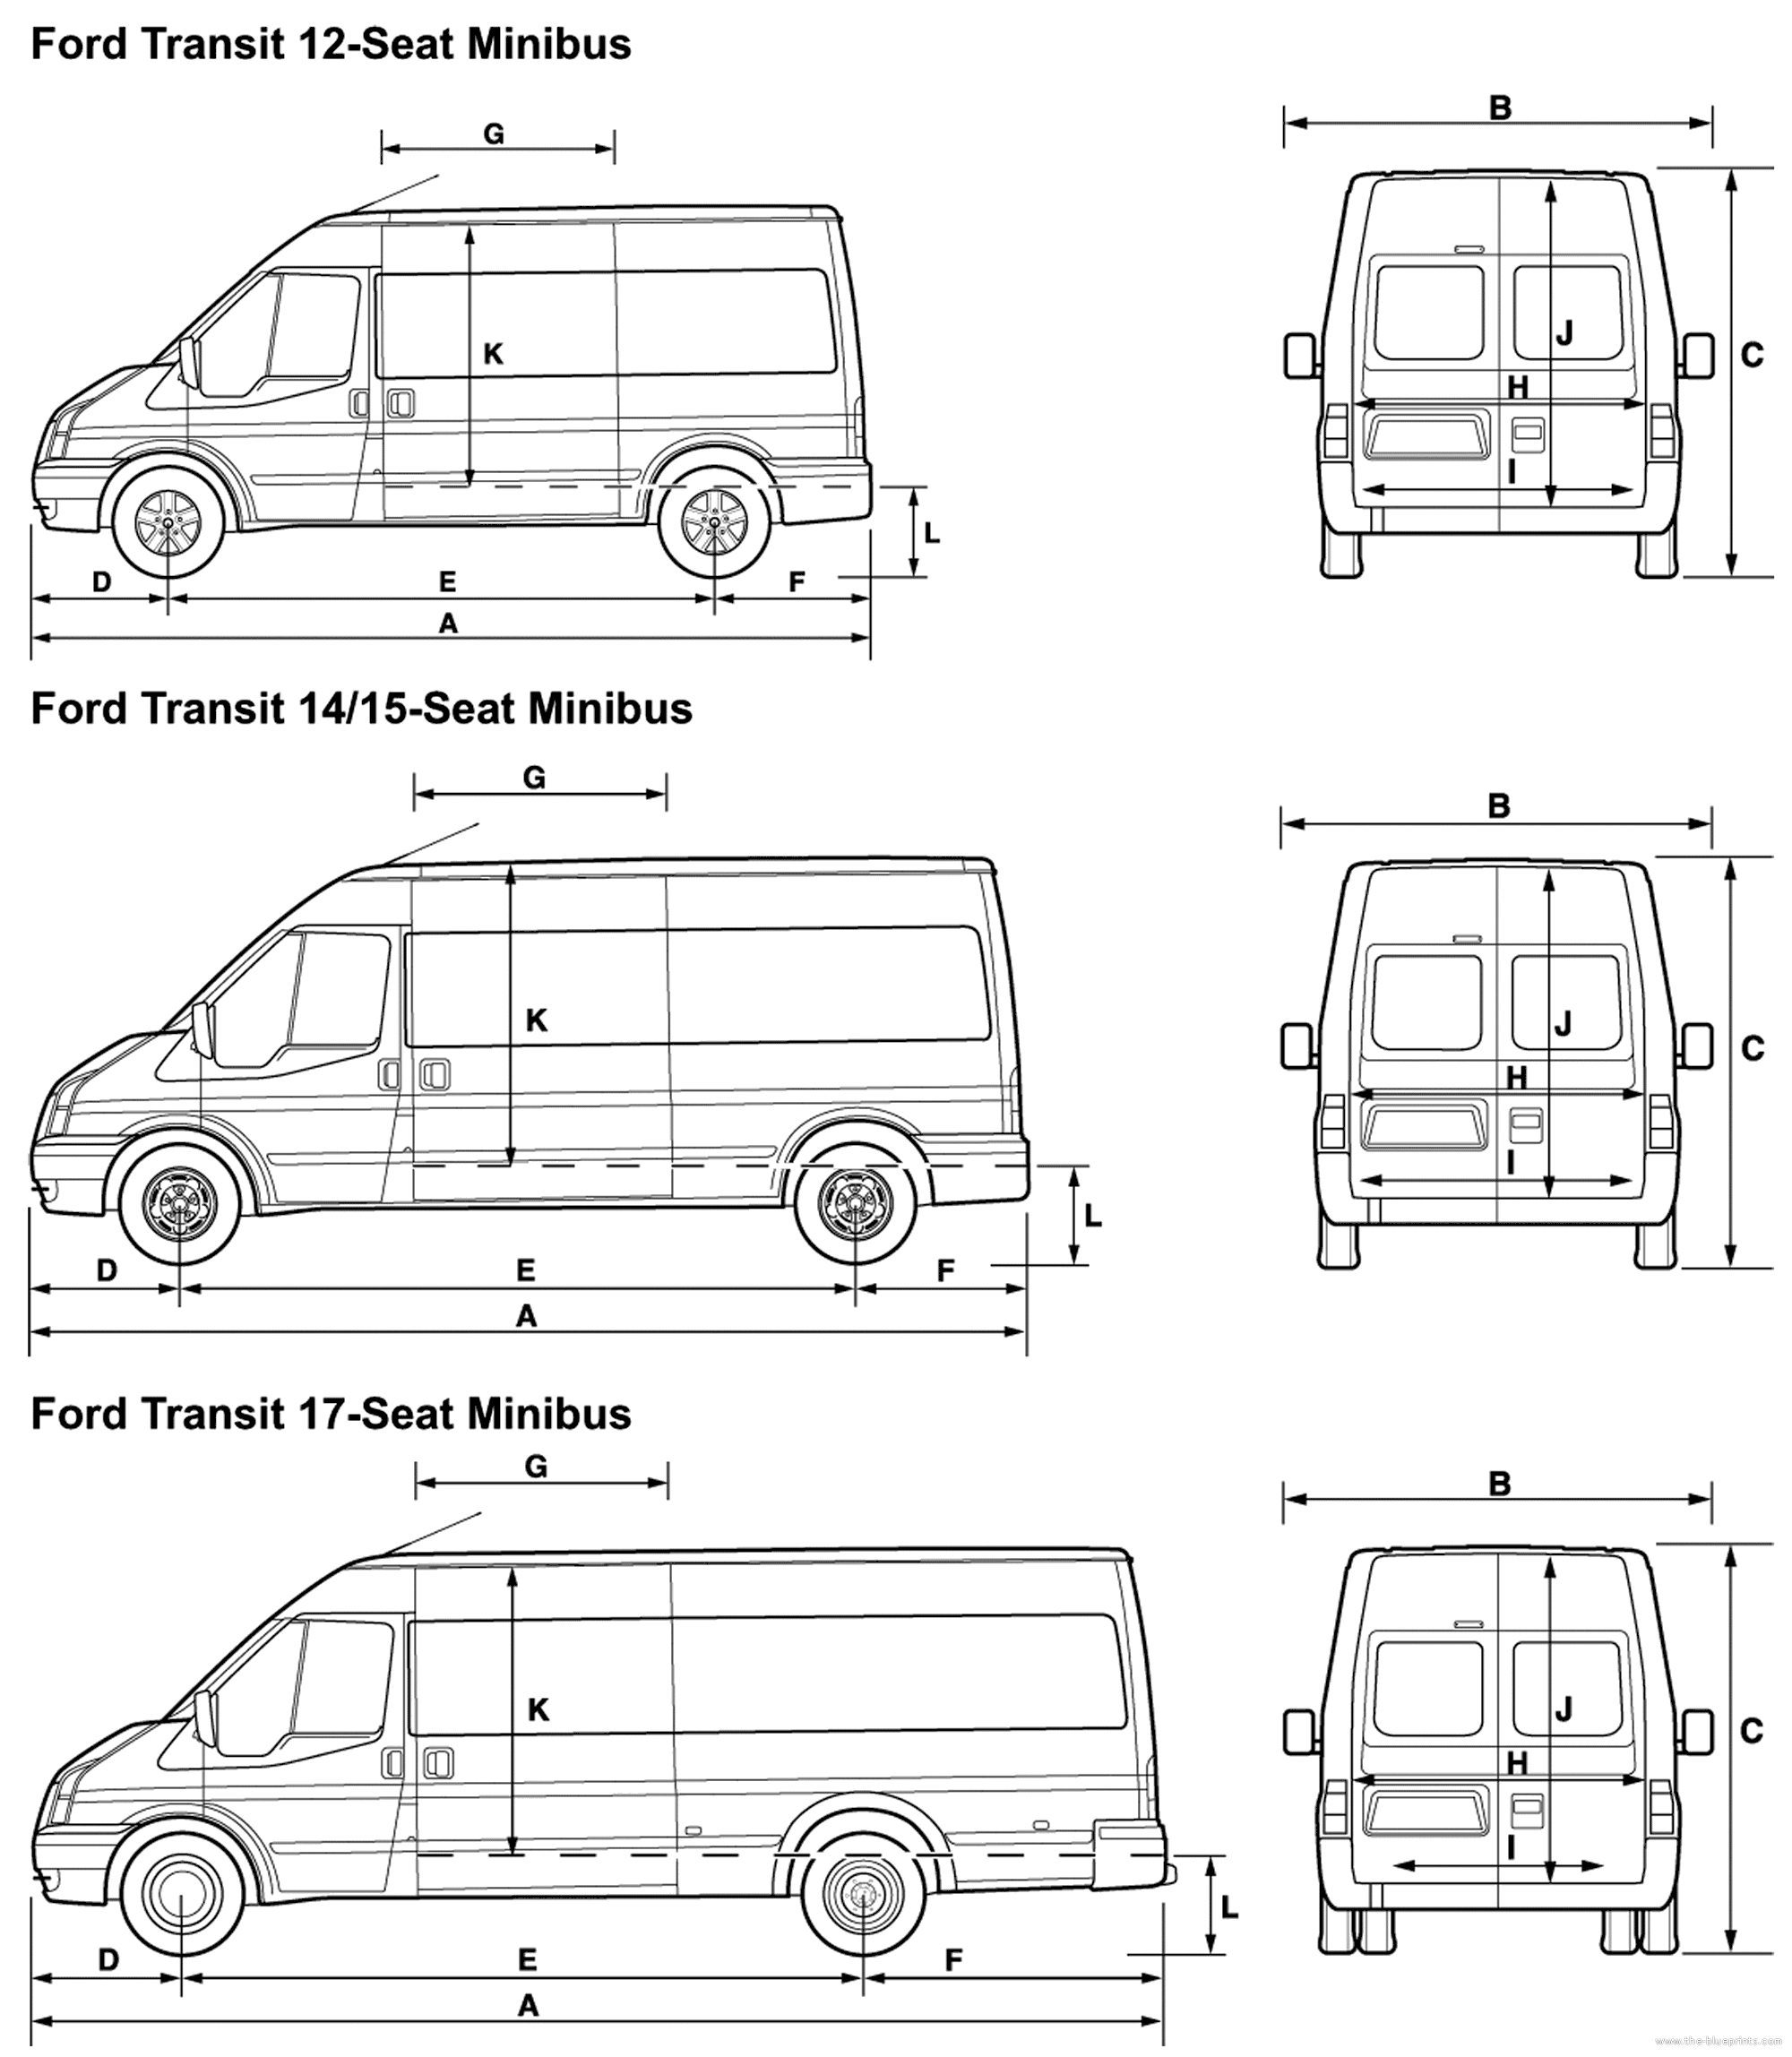 Ford transit minibus 2003 dimensions #10